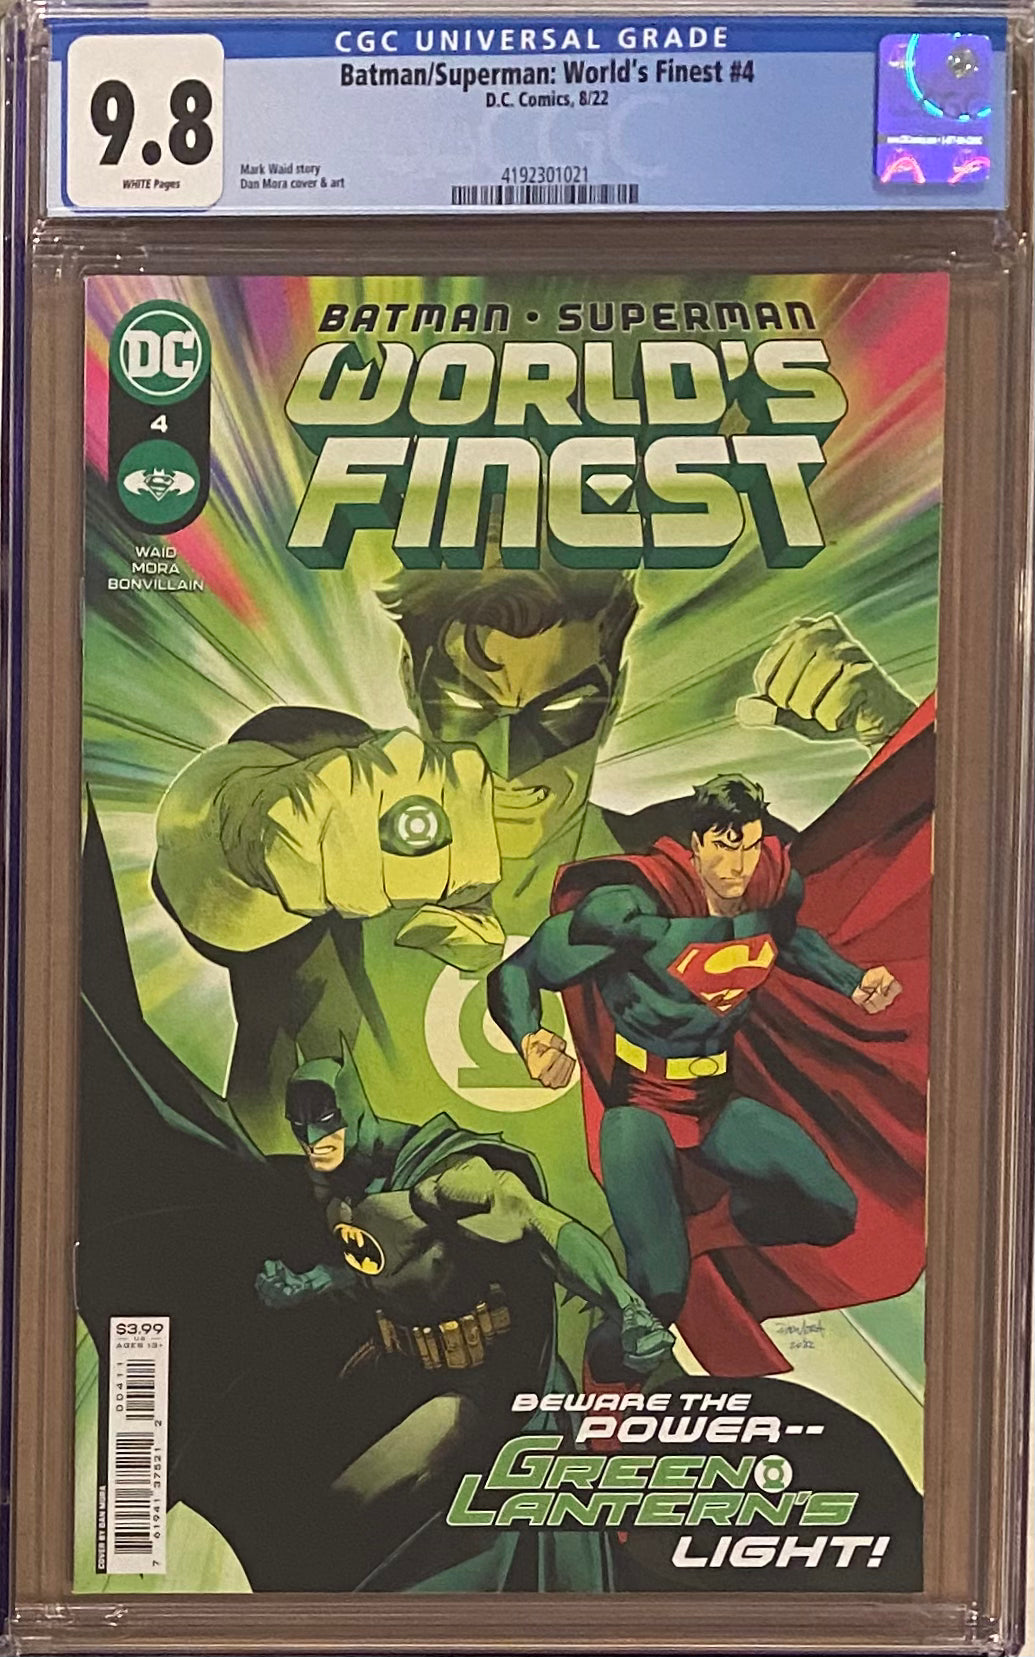 Batman/Superman: World's Finest #4 CGC 9.8